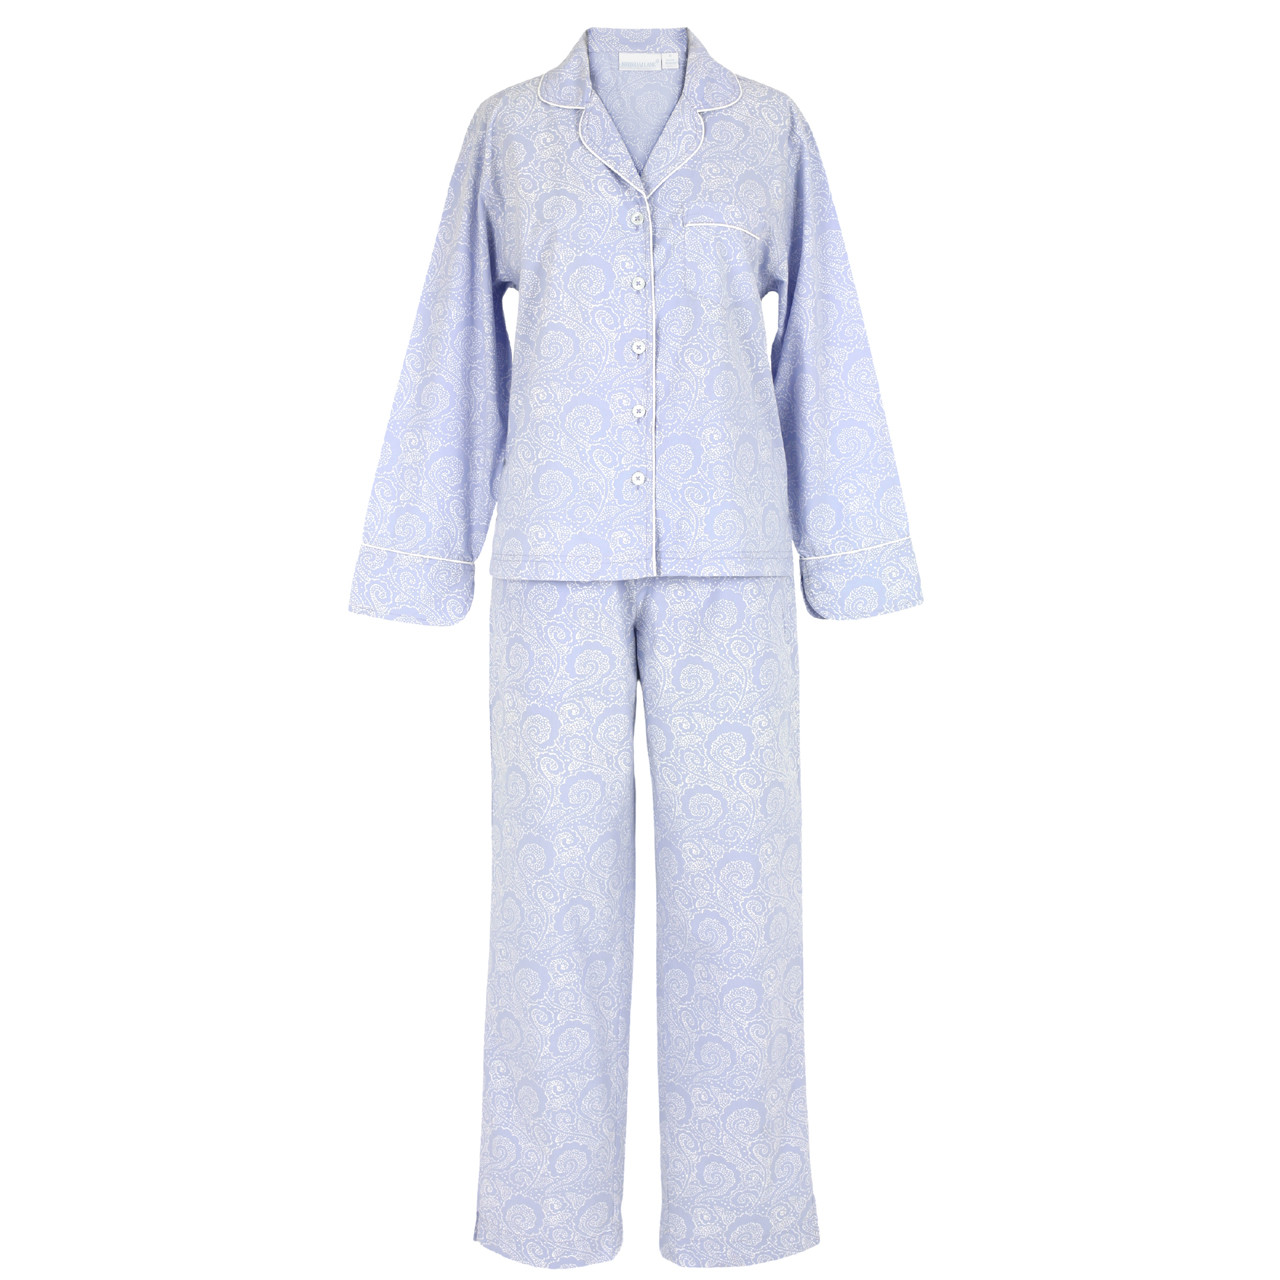 Hanxiuju Spring Autumn Royal Vintage Pajamas Sets For Lady Soft Cotton Long  Sleeve Sleepwear Comfortable Home Clothes